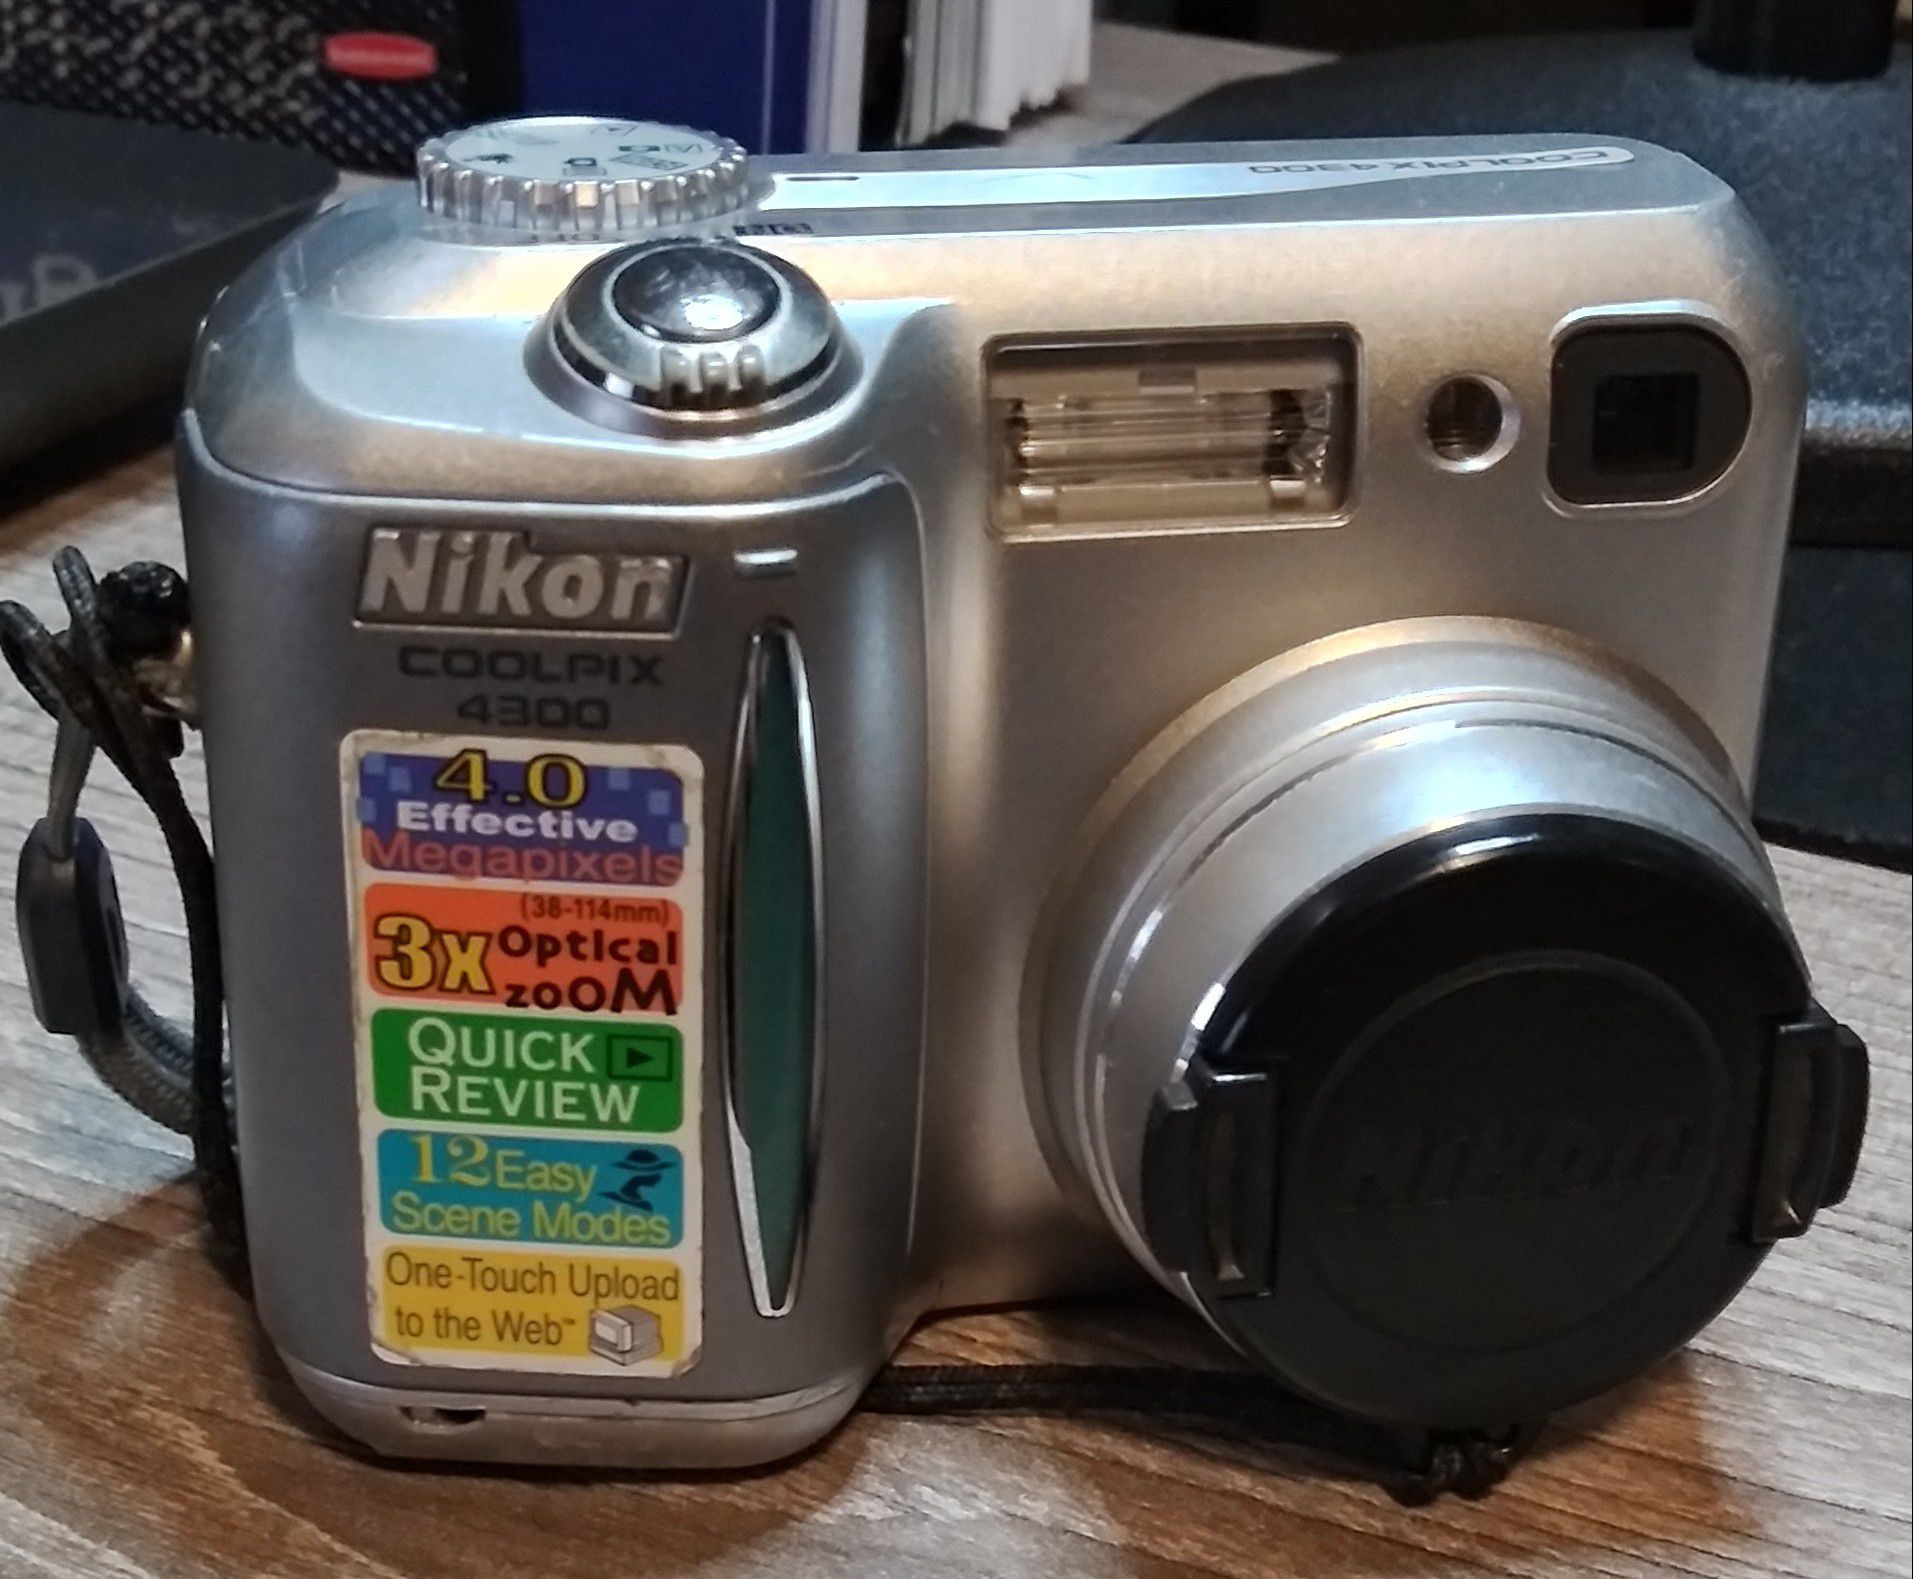 Nikon E4300 Camera